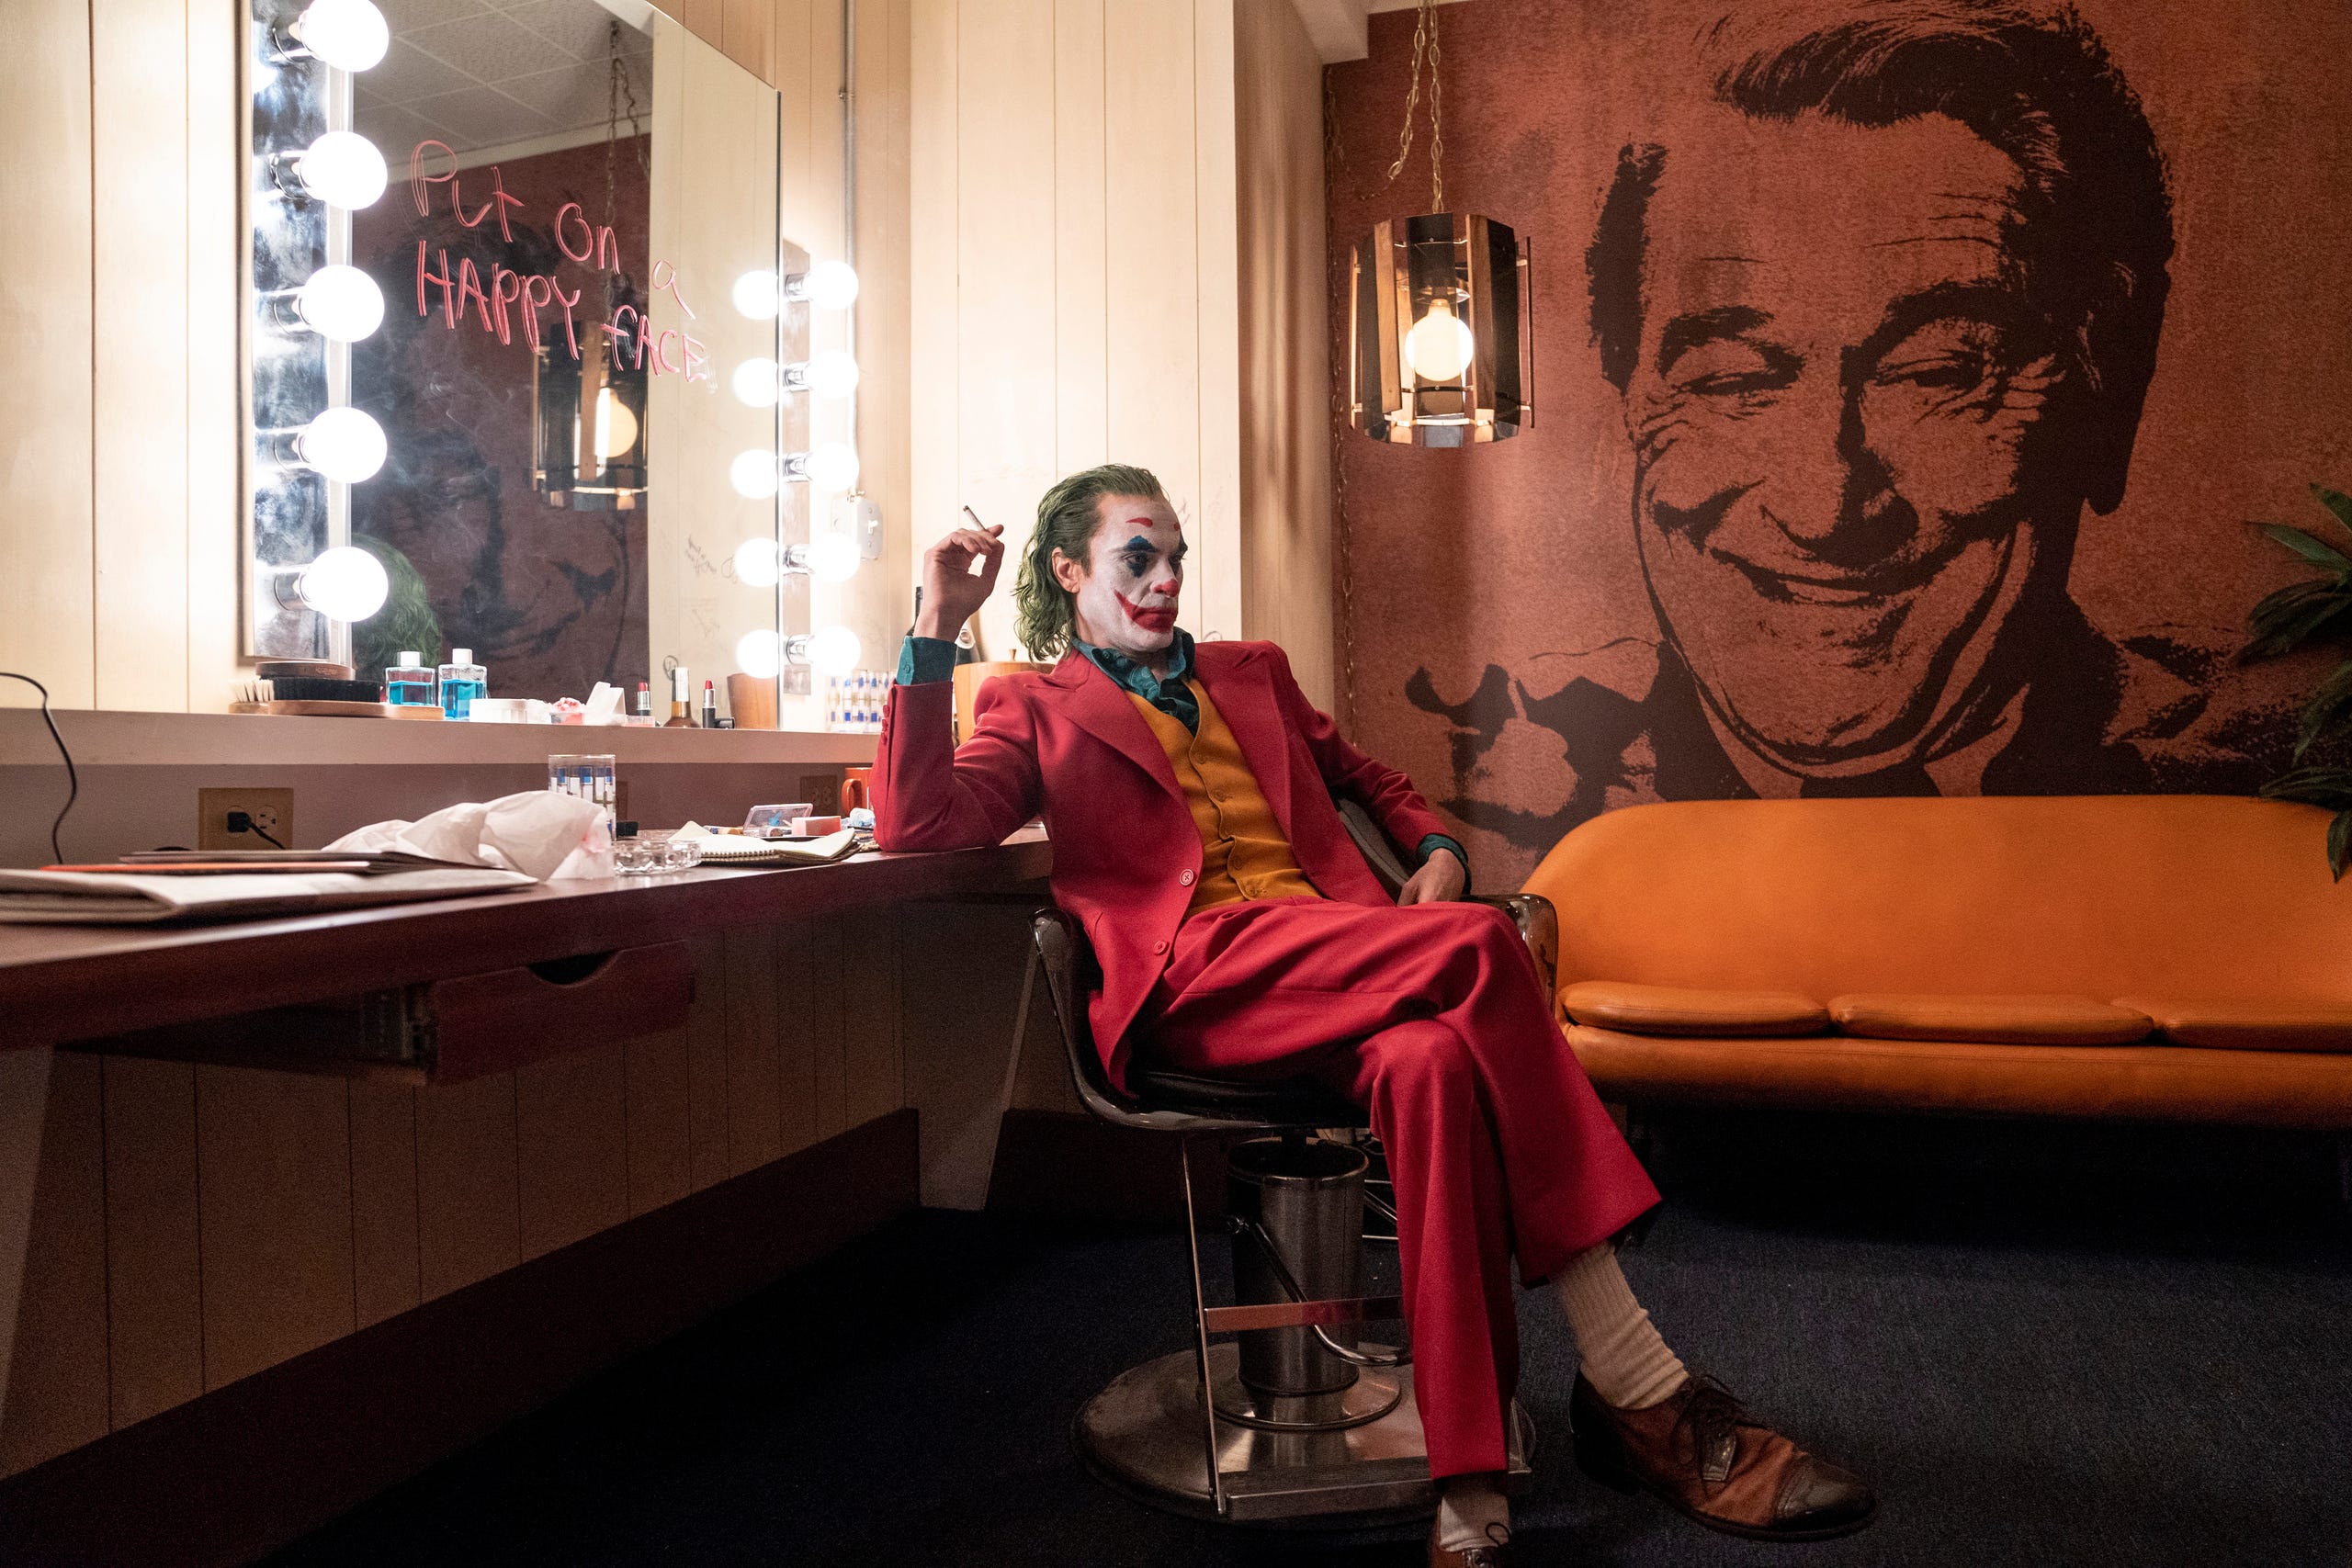 The Laugh Clown Breakfast Club Joker Joaquin Phoenix Heath Ledger Black T-shirt